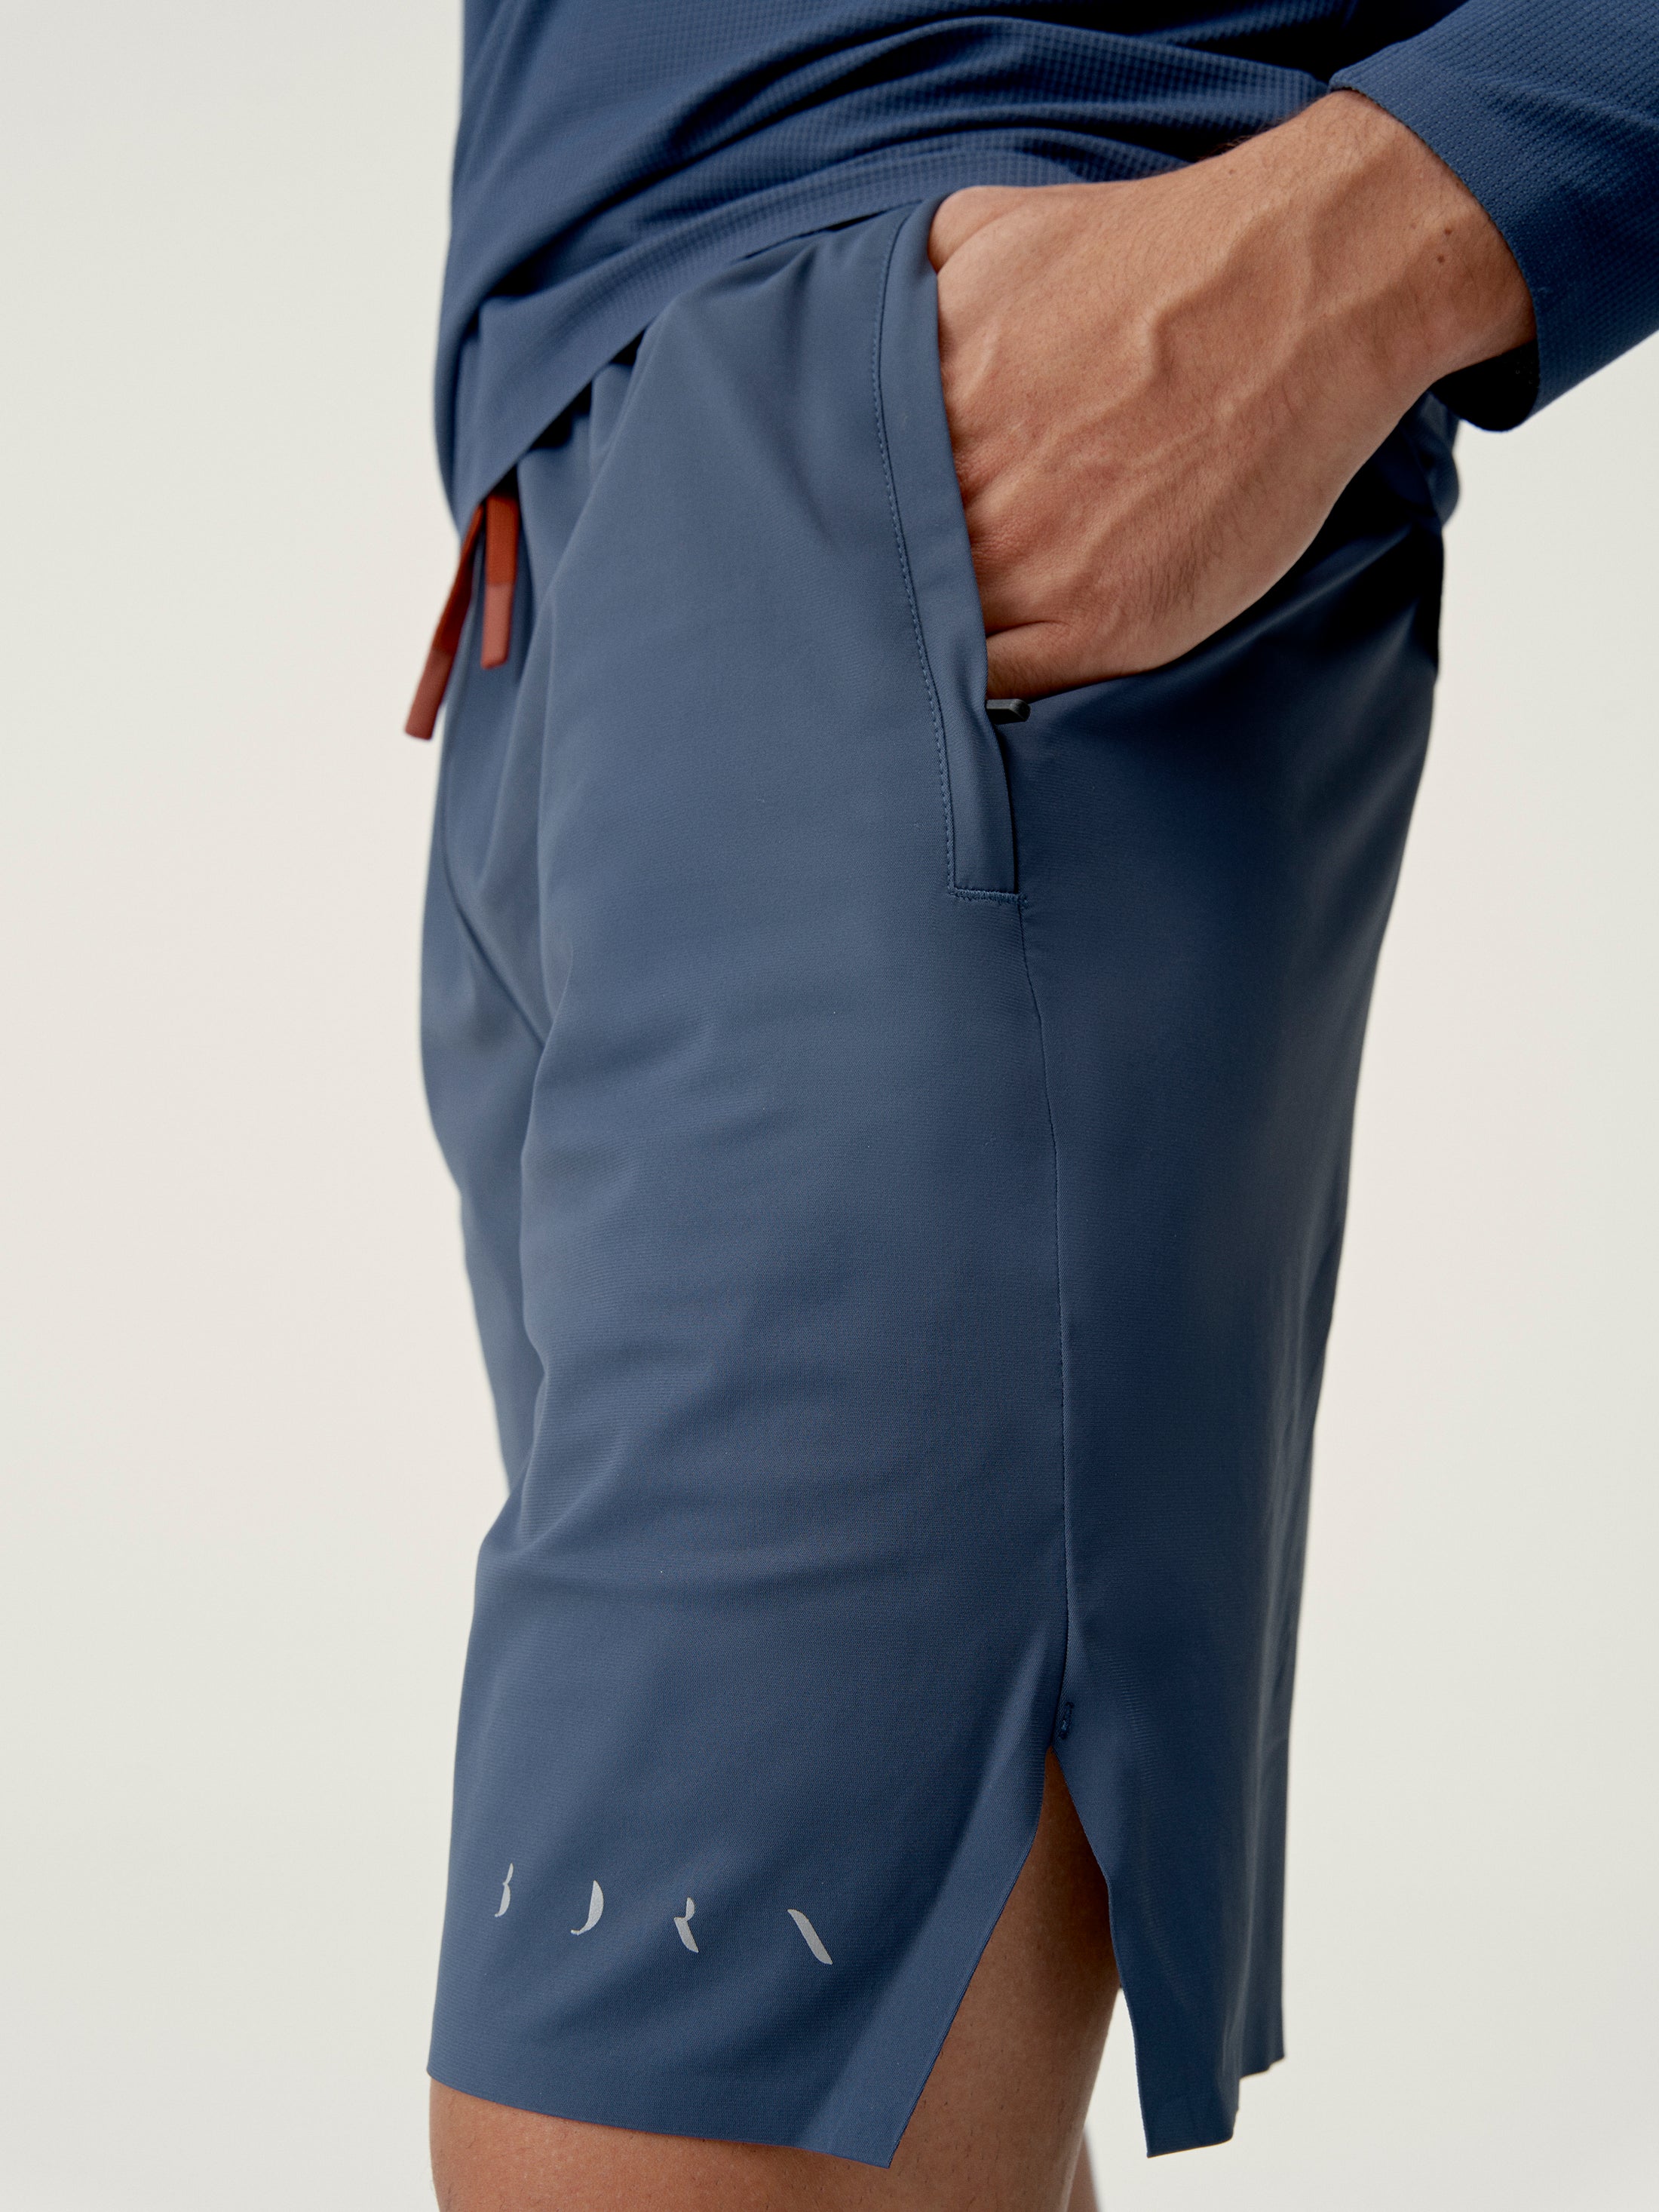 Orinoco Shorts in Denim Blue